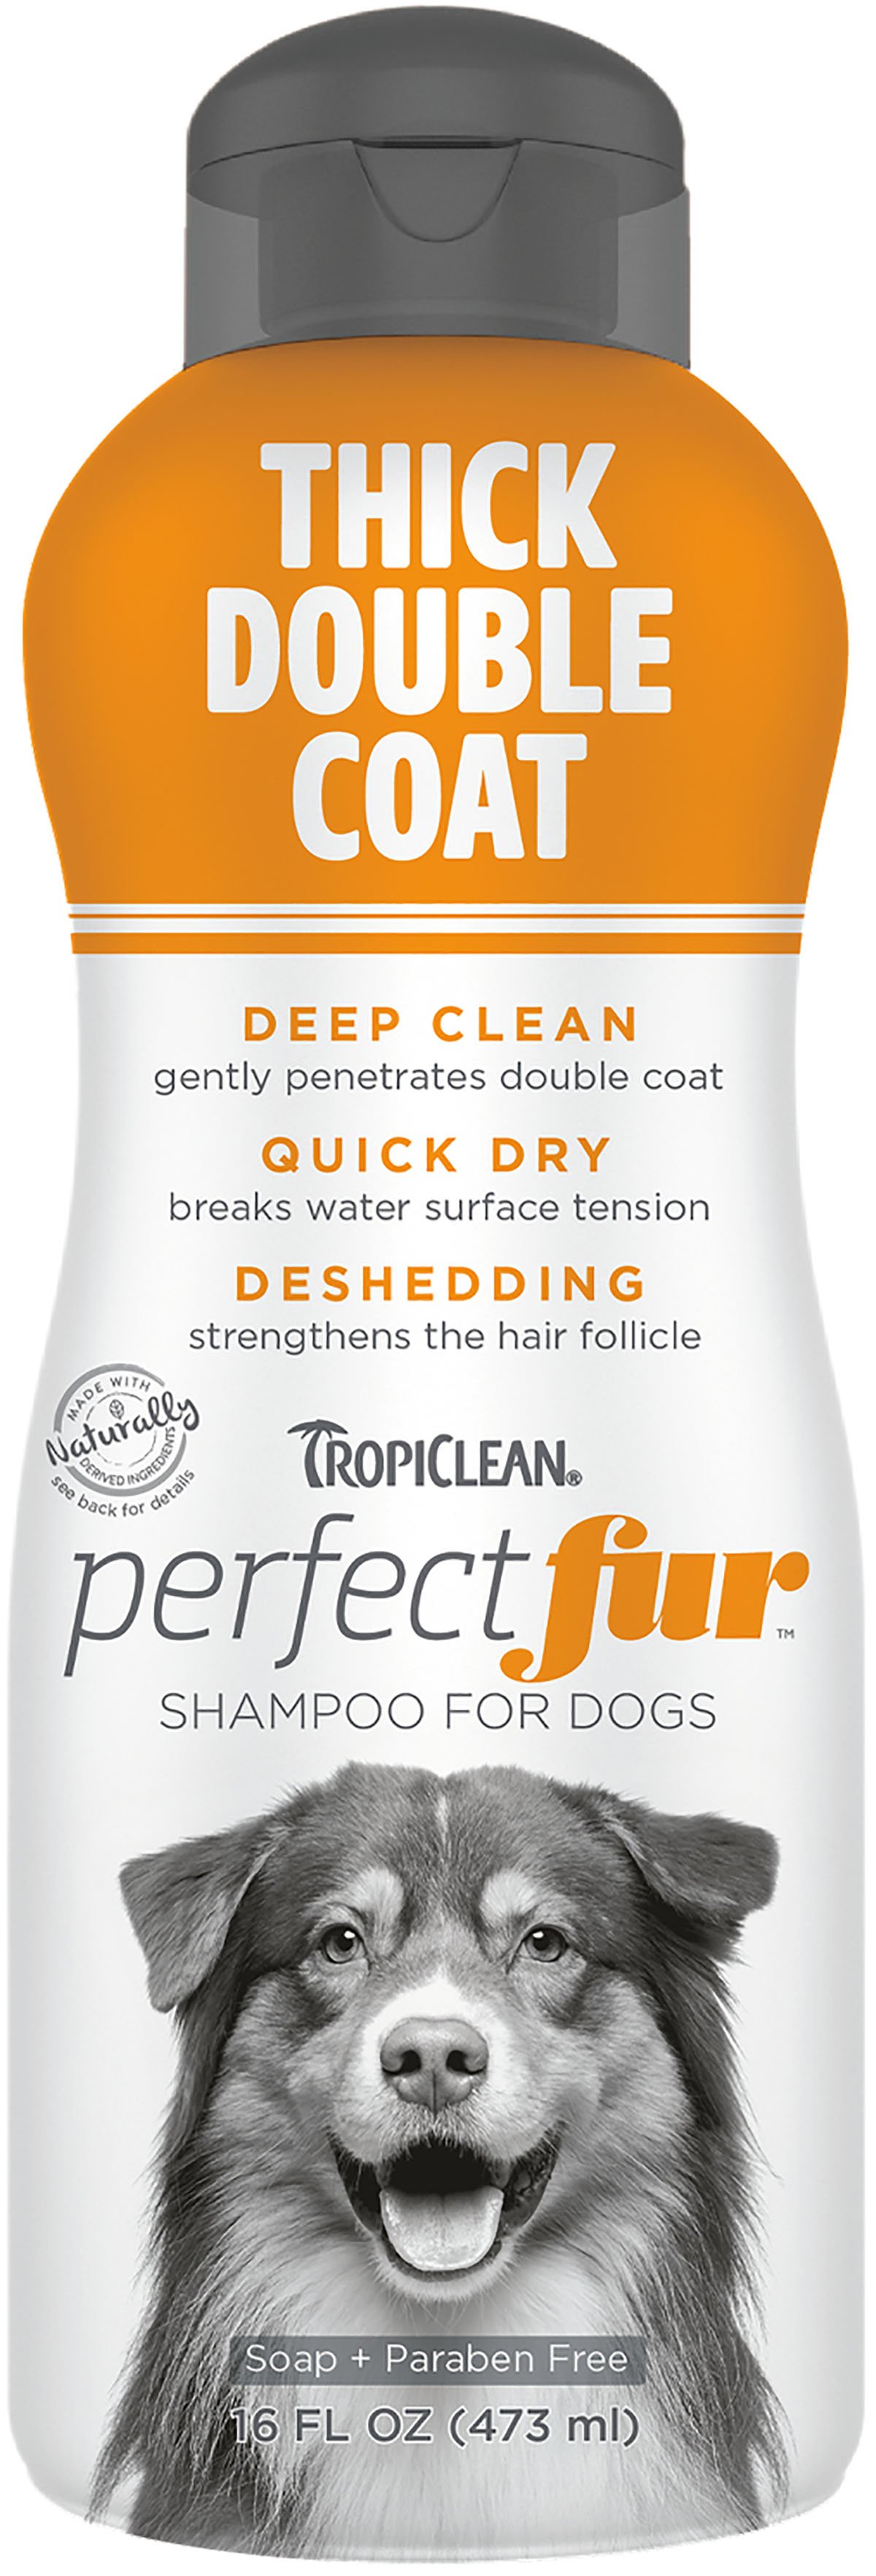 Tropiclean - perfect fur til tyk underpels shampoo - 473ml